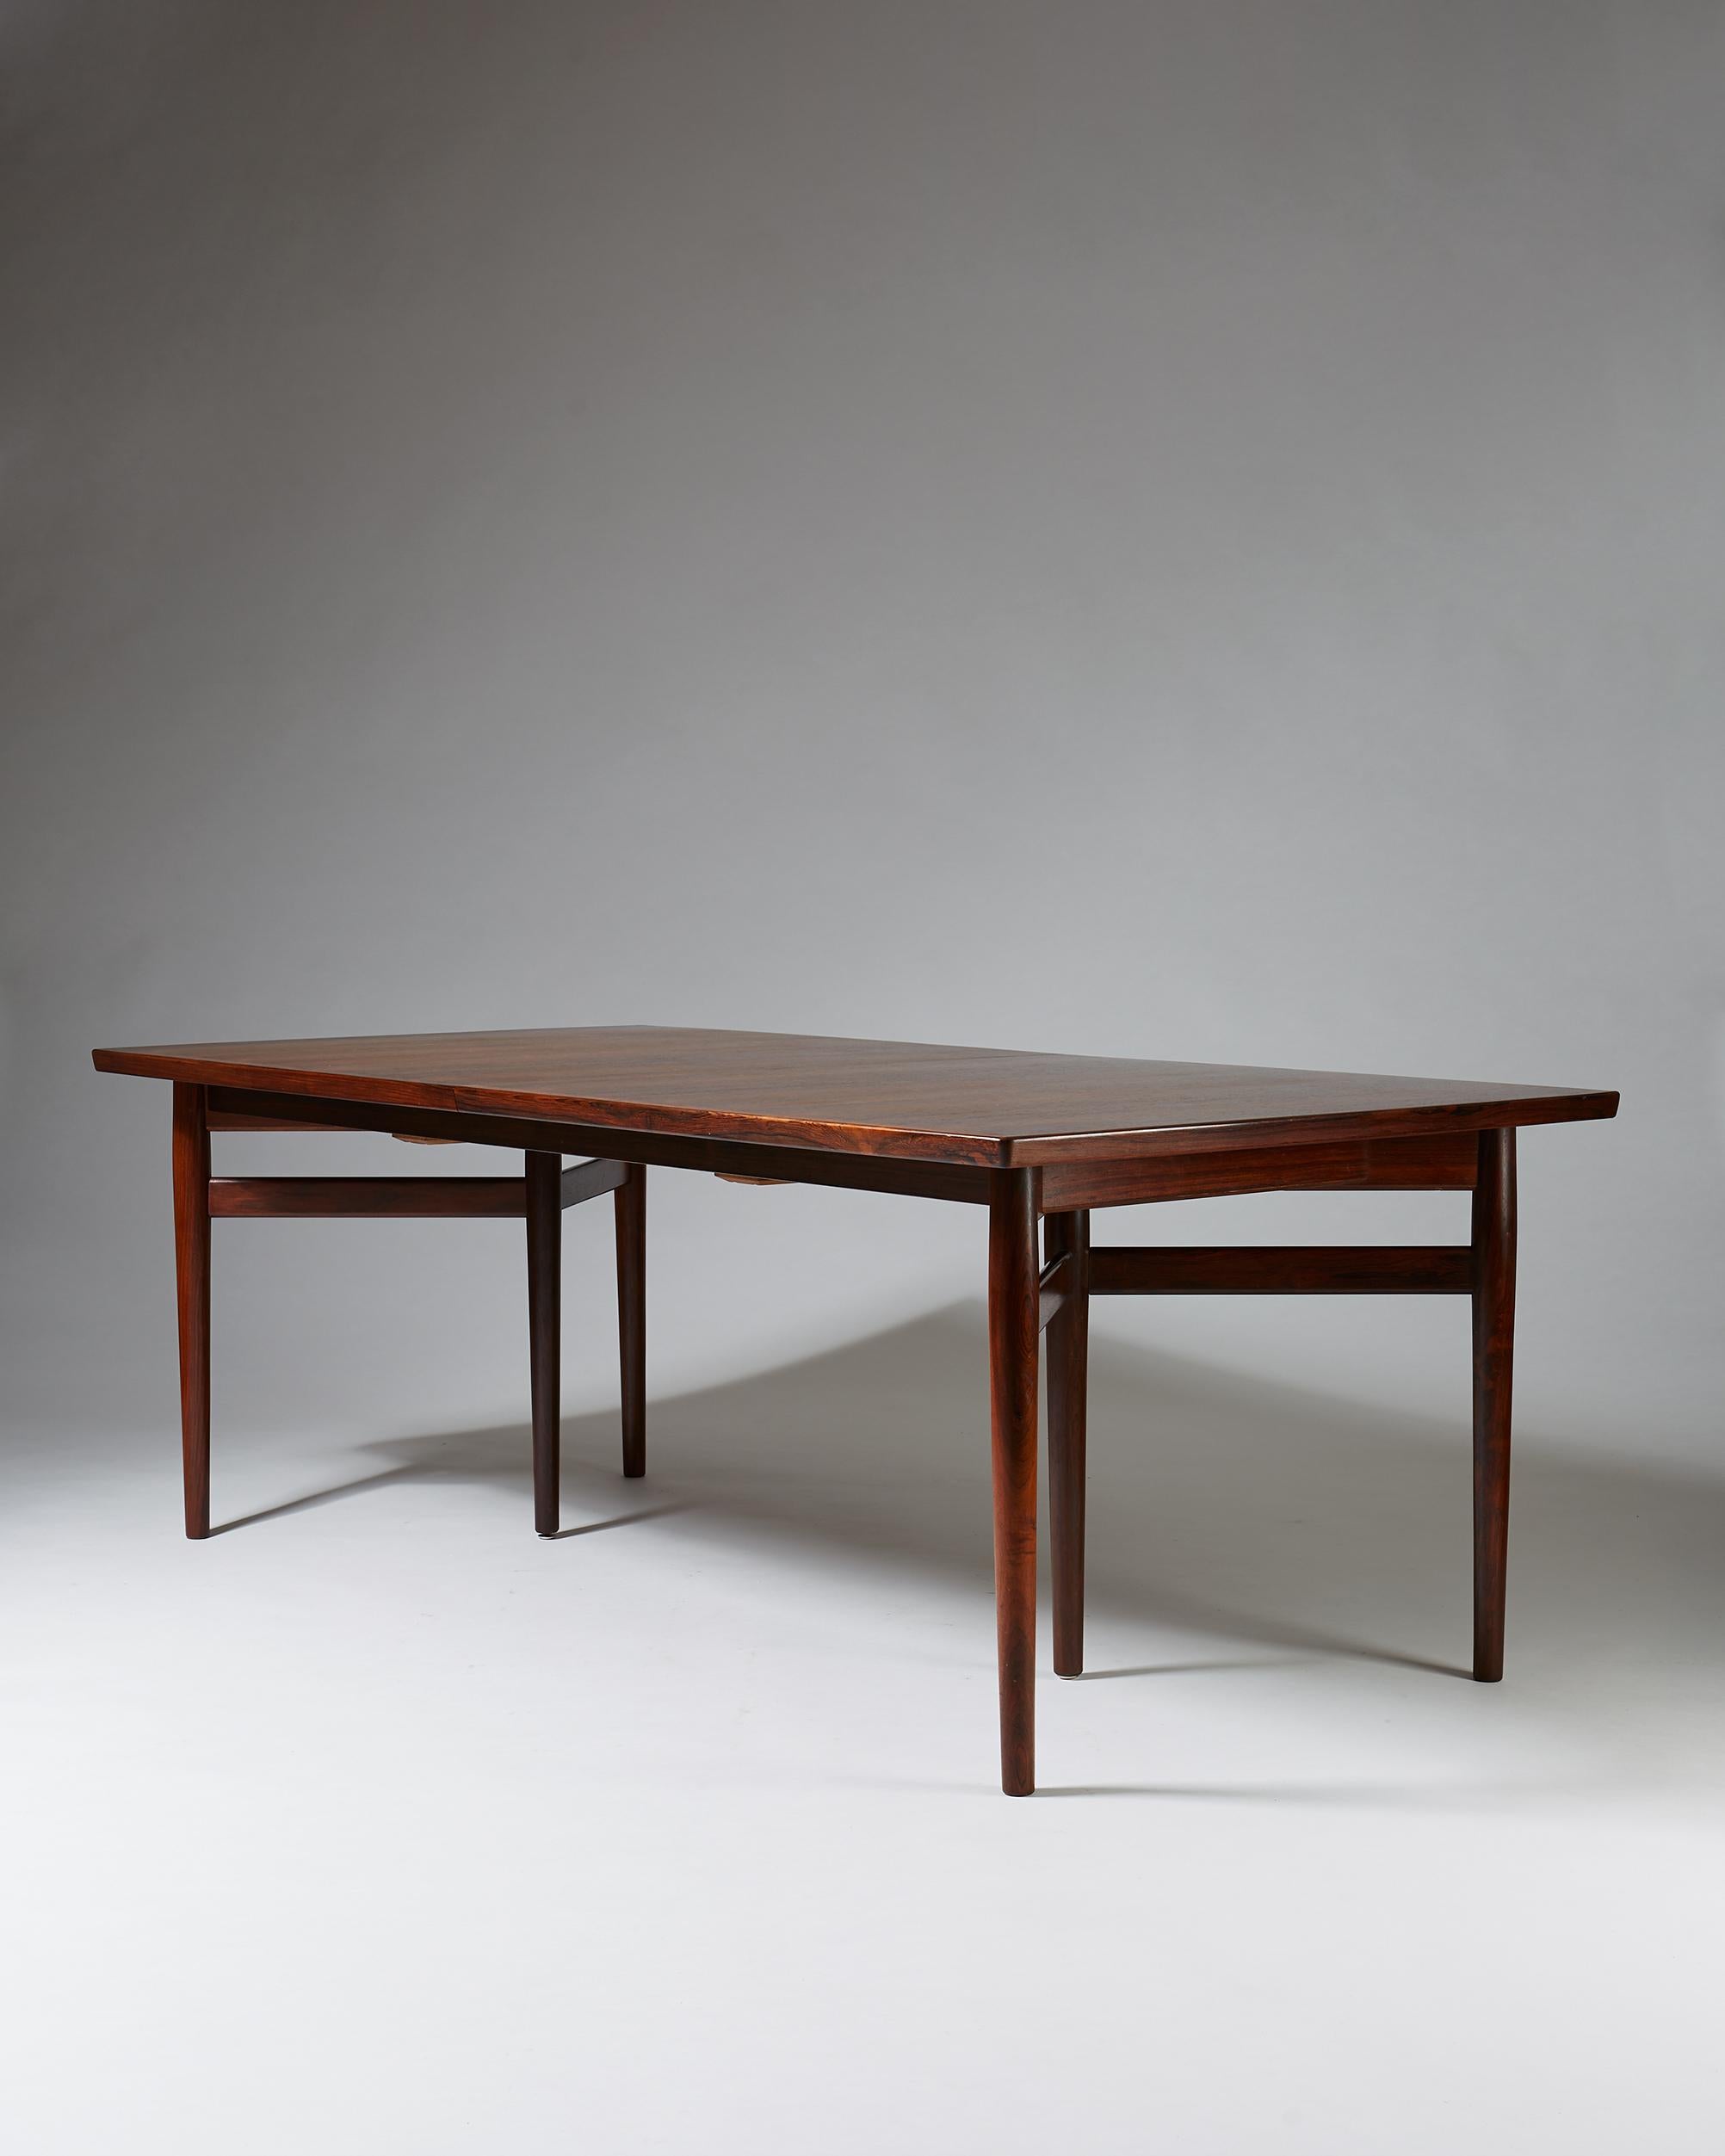 Dining table designed by Arne Vodder for Sibast,
Denmark, 1960s.

Rosewood.

Measurements: 
H: 72 cm/ 28 1/3
W: 103.5 cm/ 3' 4 3/4